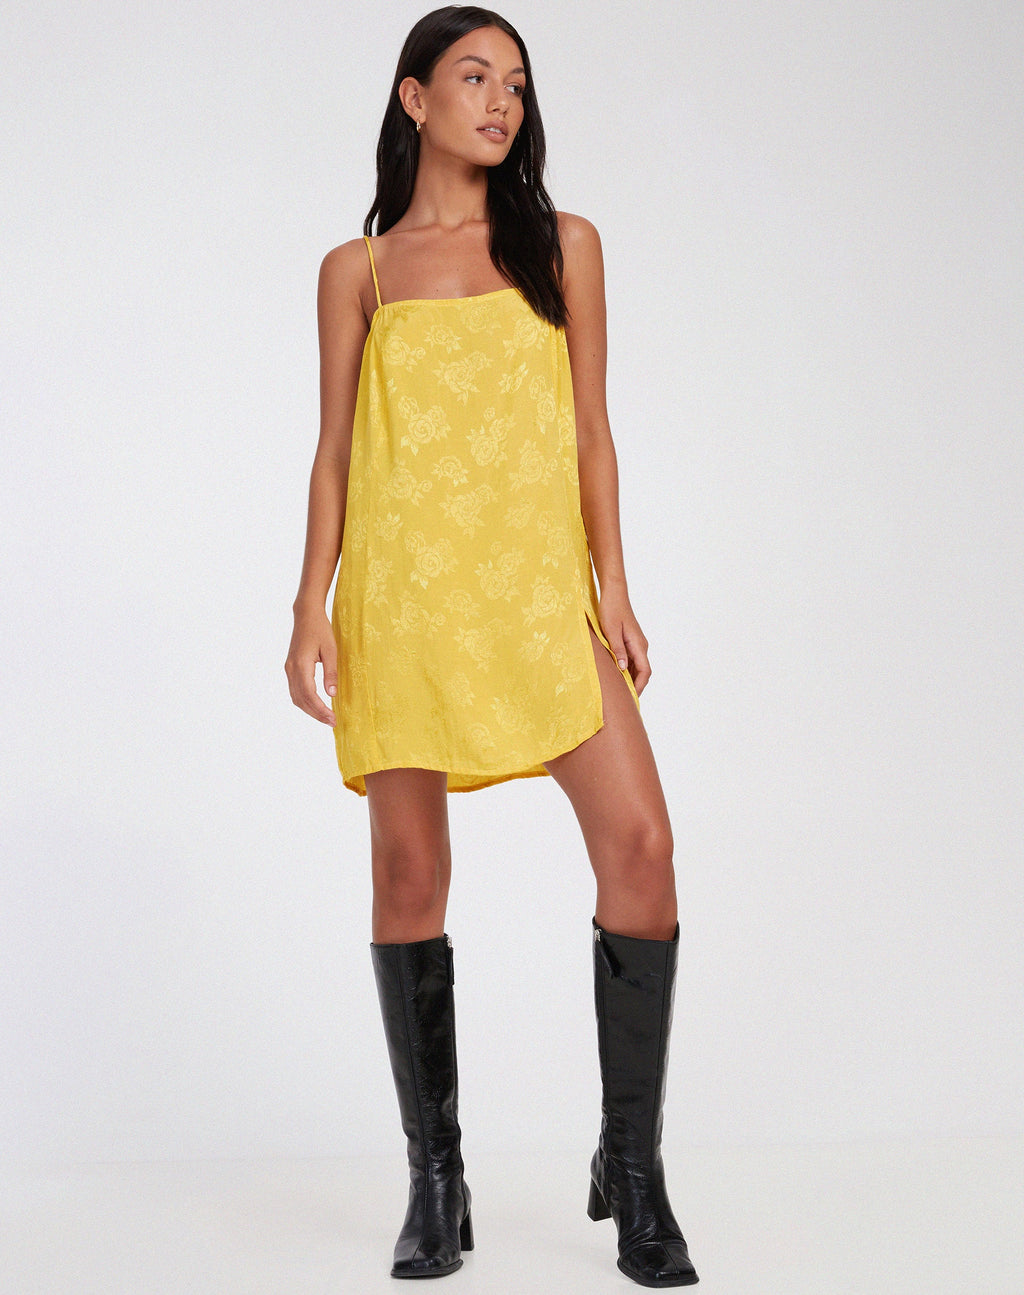 Datista Mini Dress in Satin Rose Sunshine Yellow